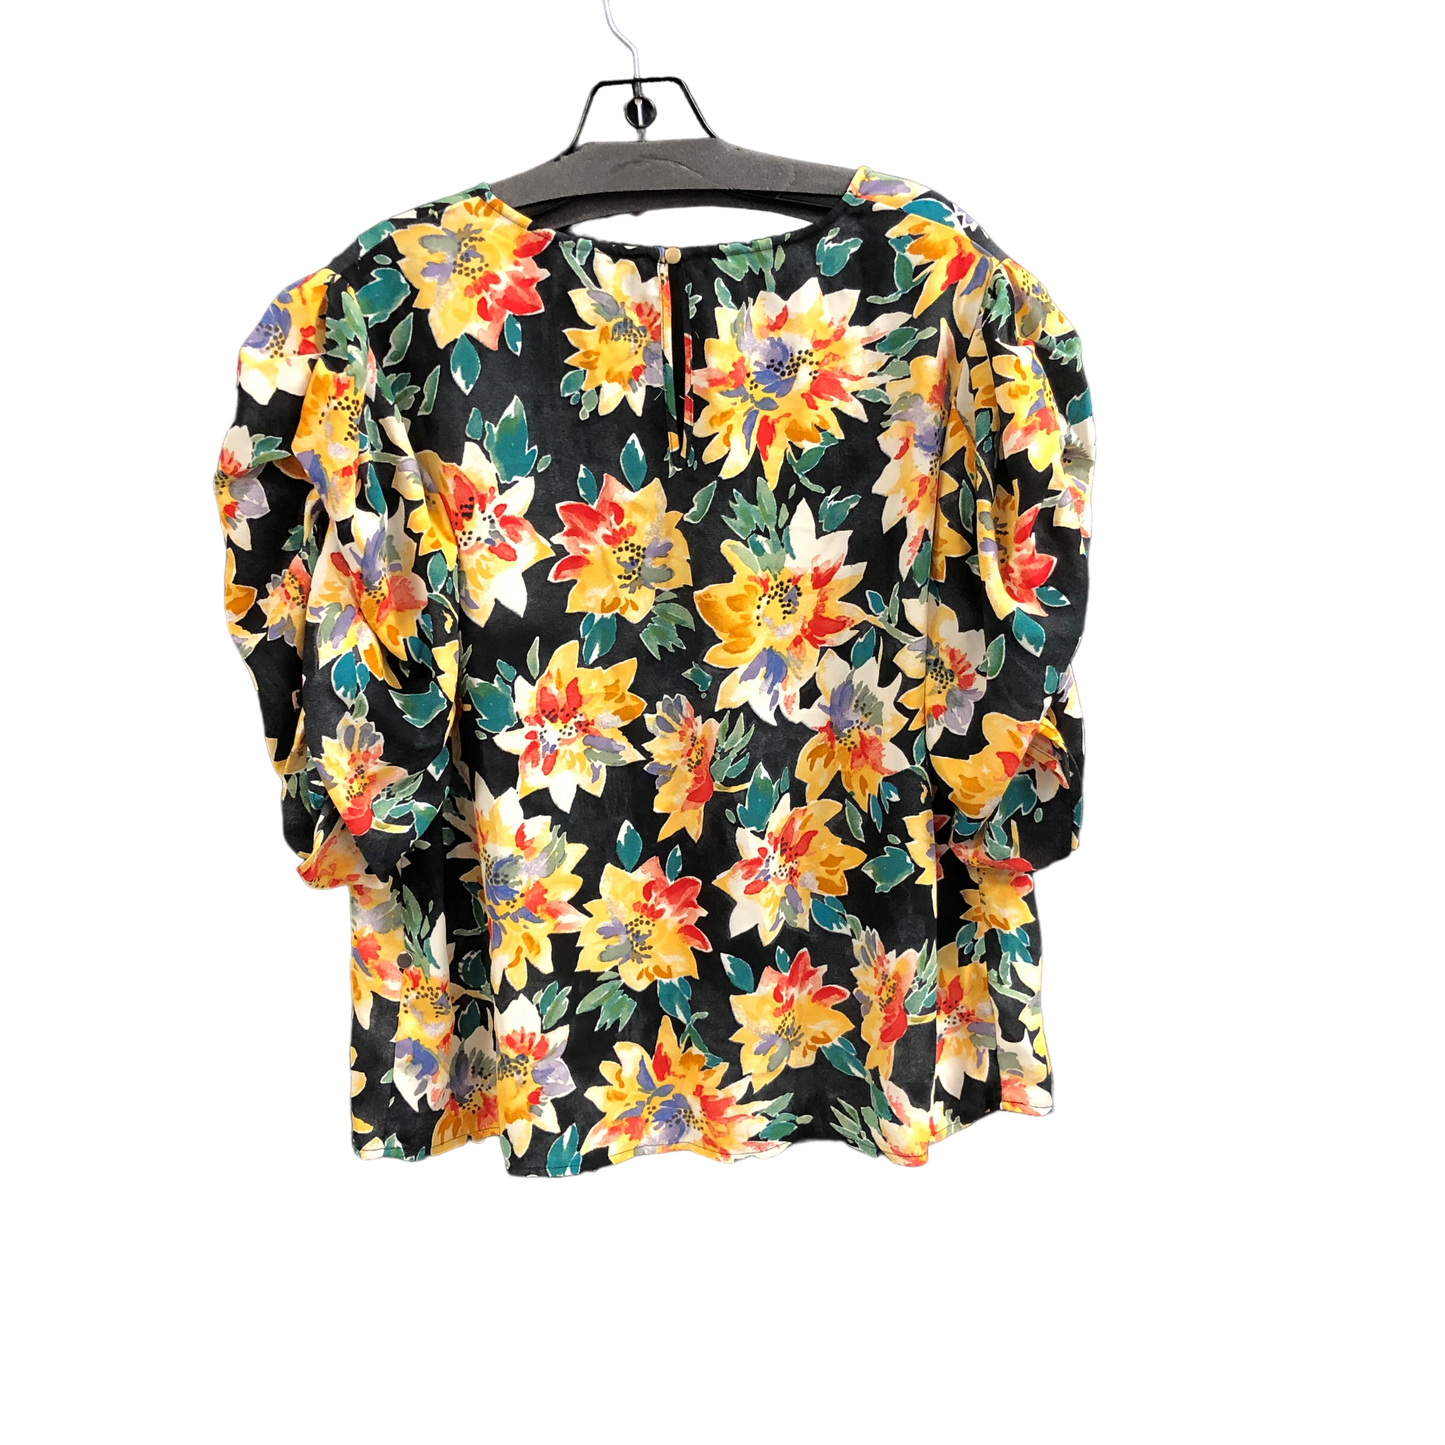 Floral Print Top Short Sleeve Ava & Viv, Size 1x